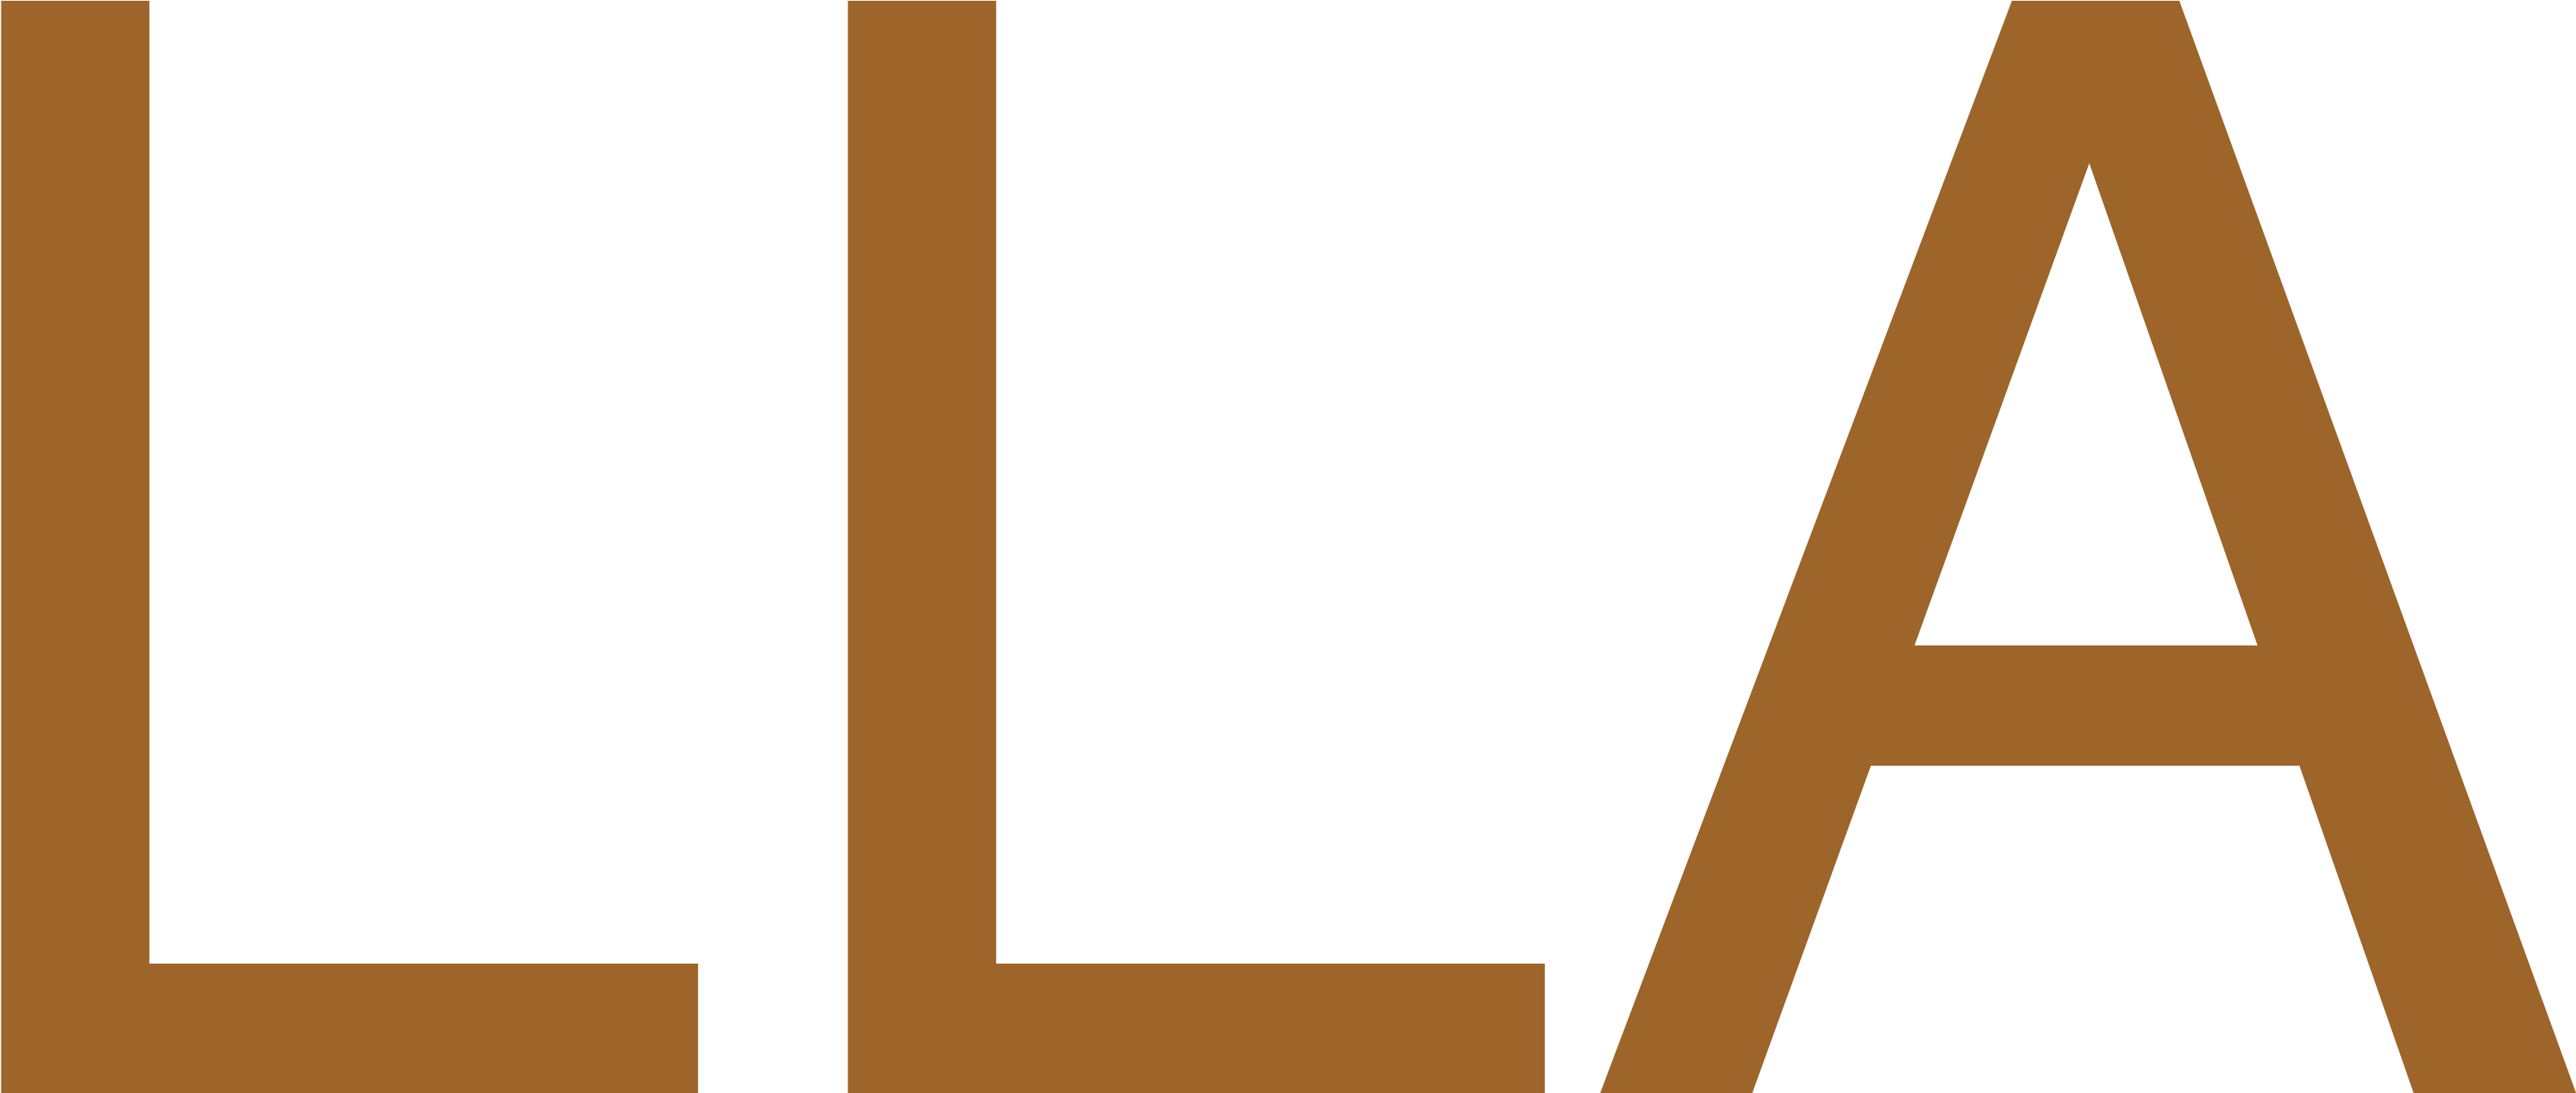 La Llowarch Llowarch Architects - La Llowarch Llowarch Architects (3926x2465)